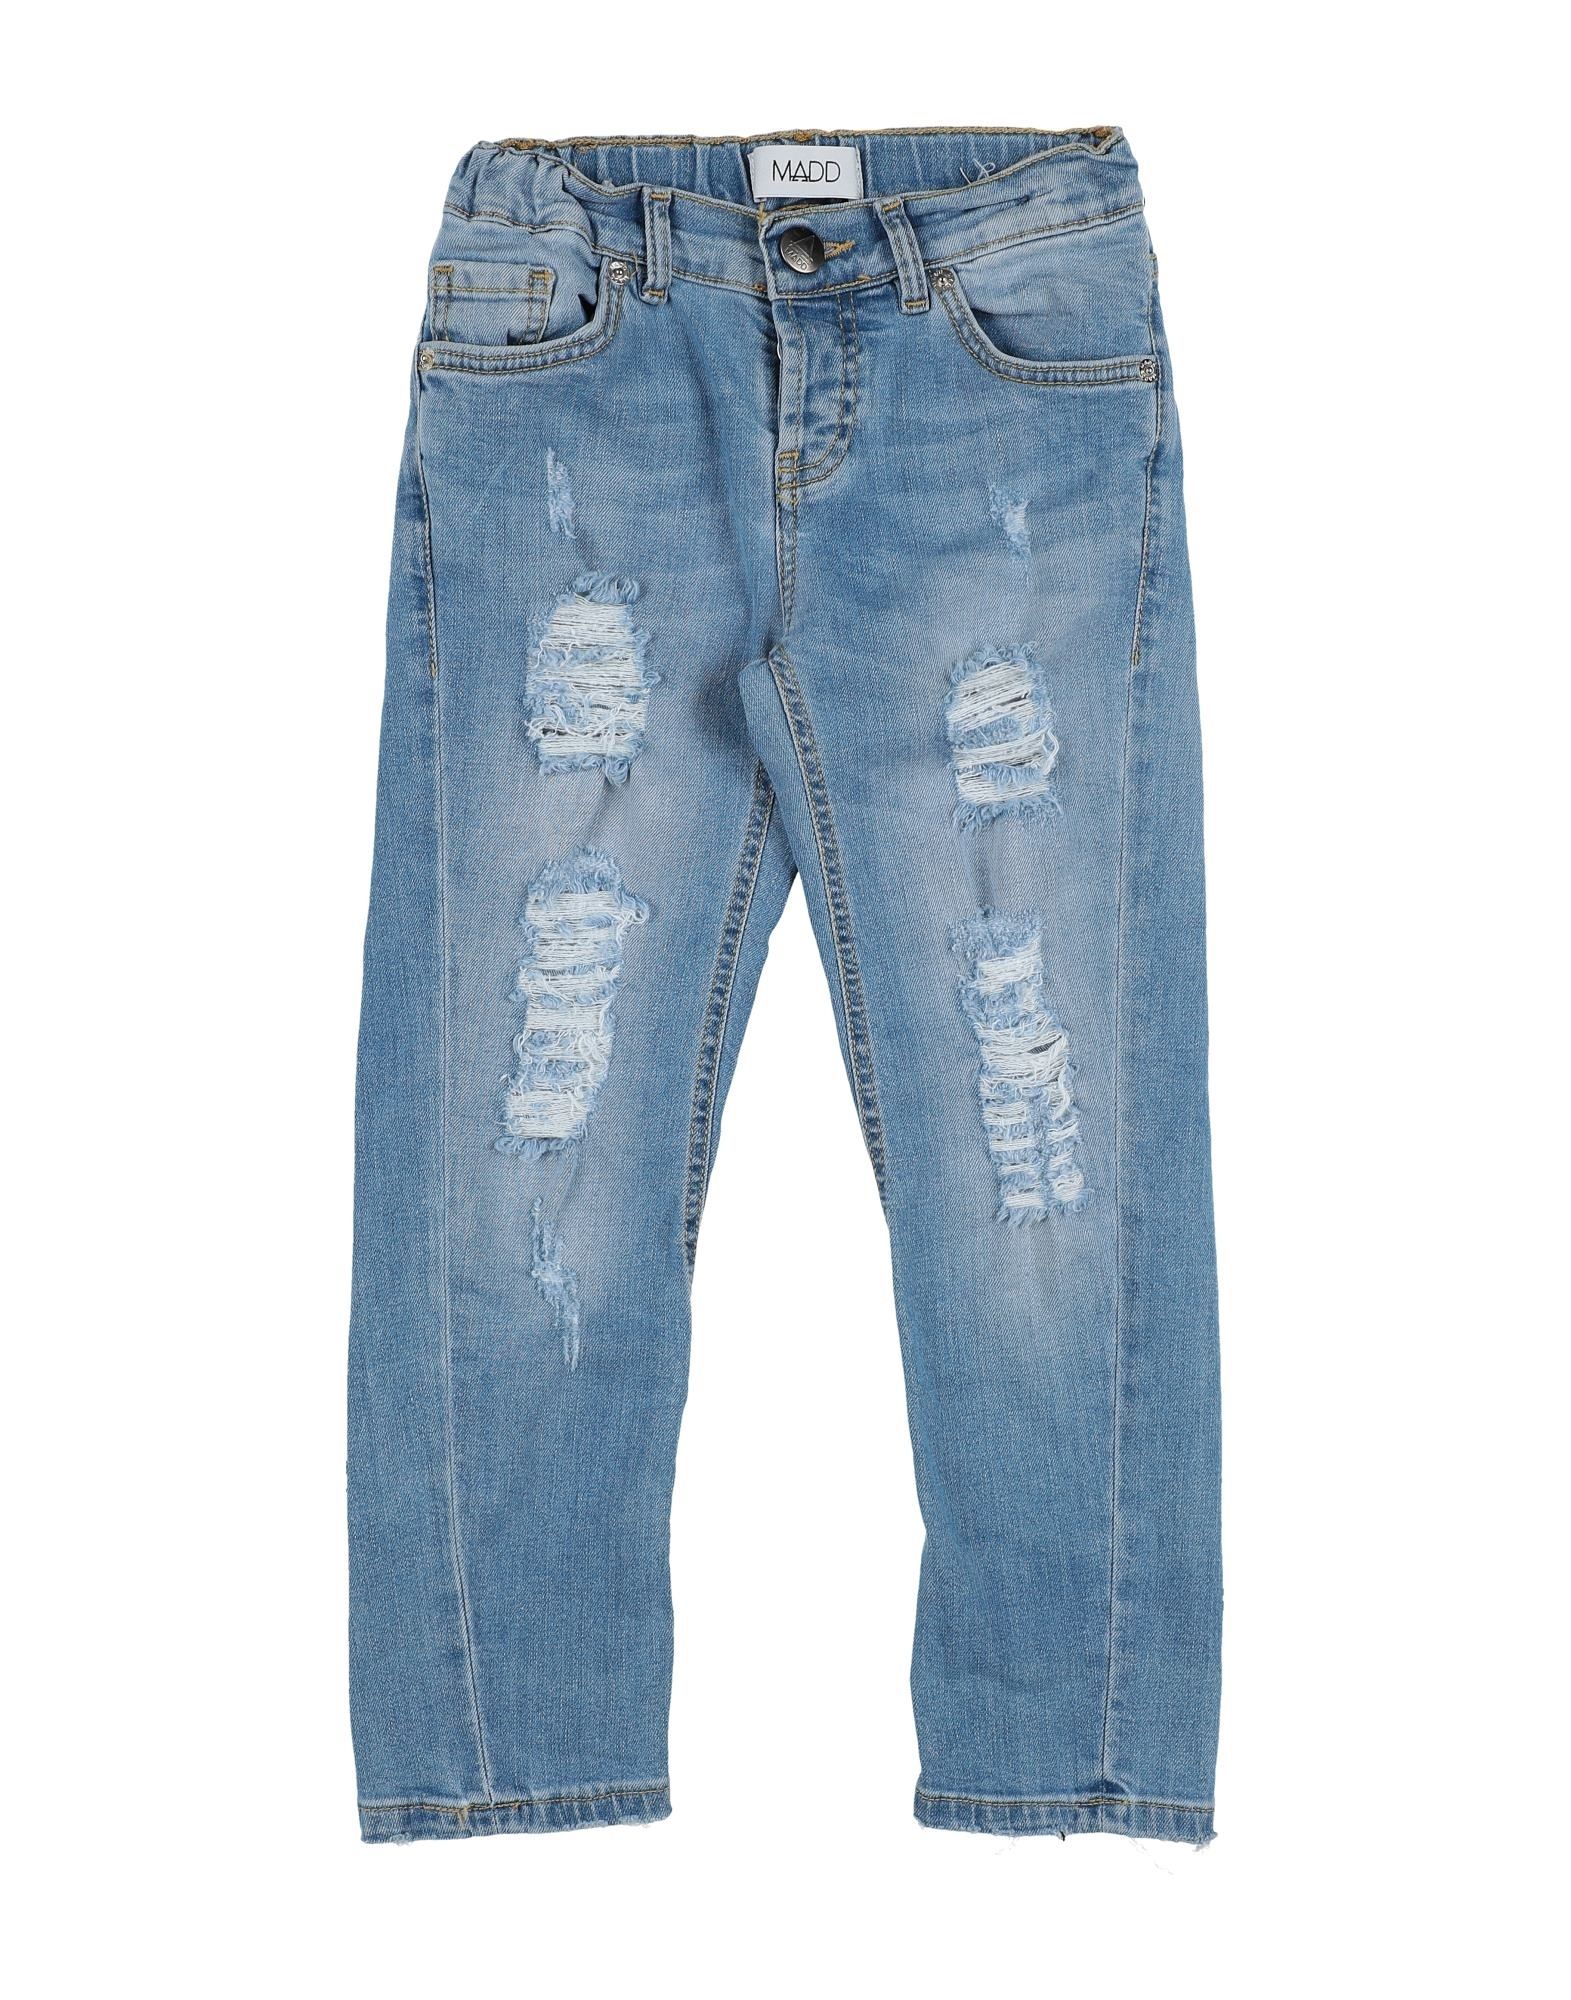 Madd Kids' Jeans In Blue